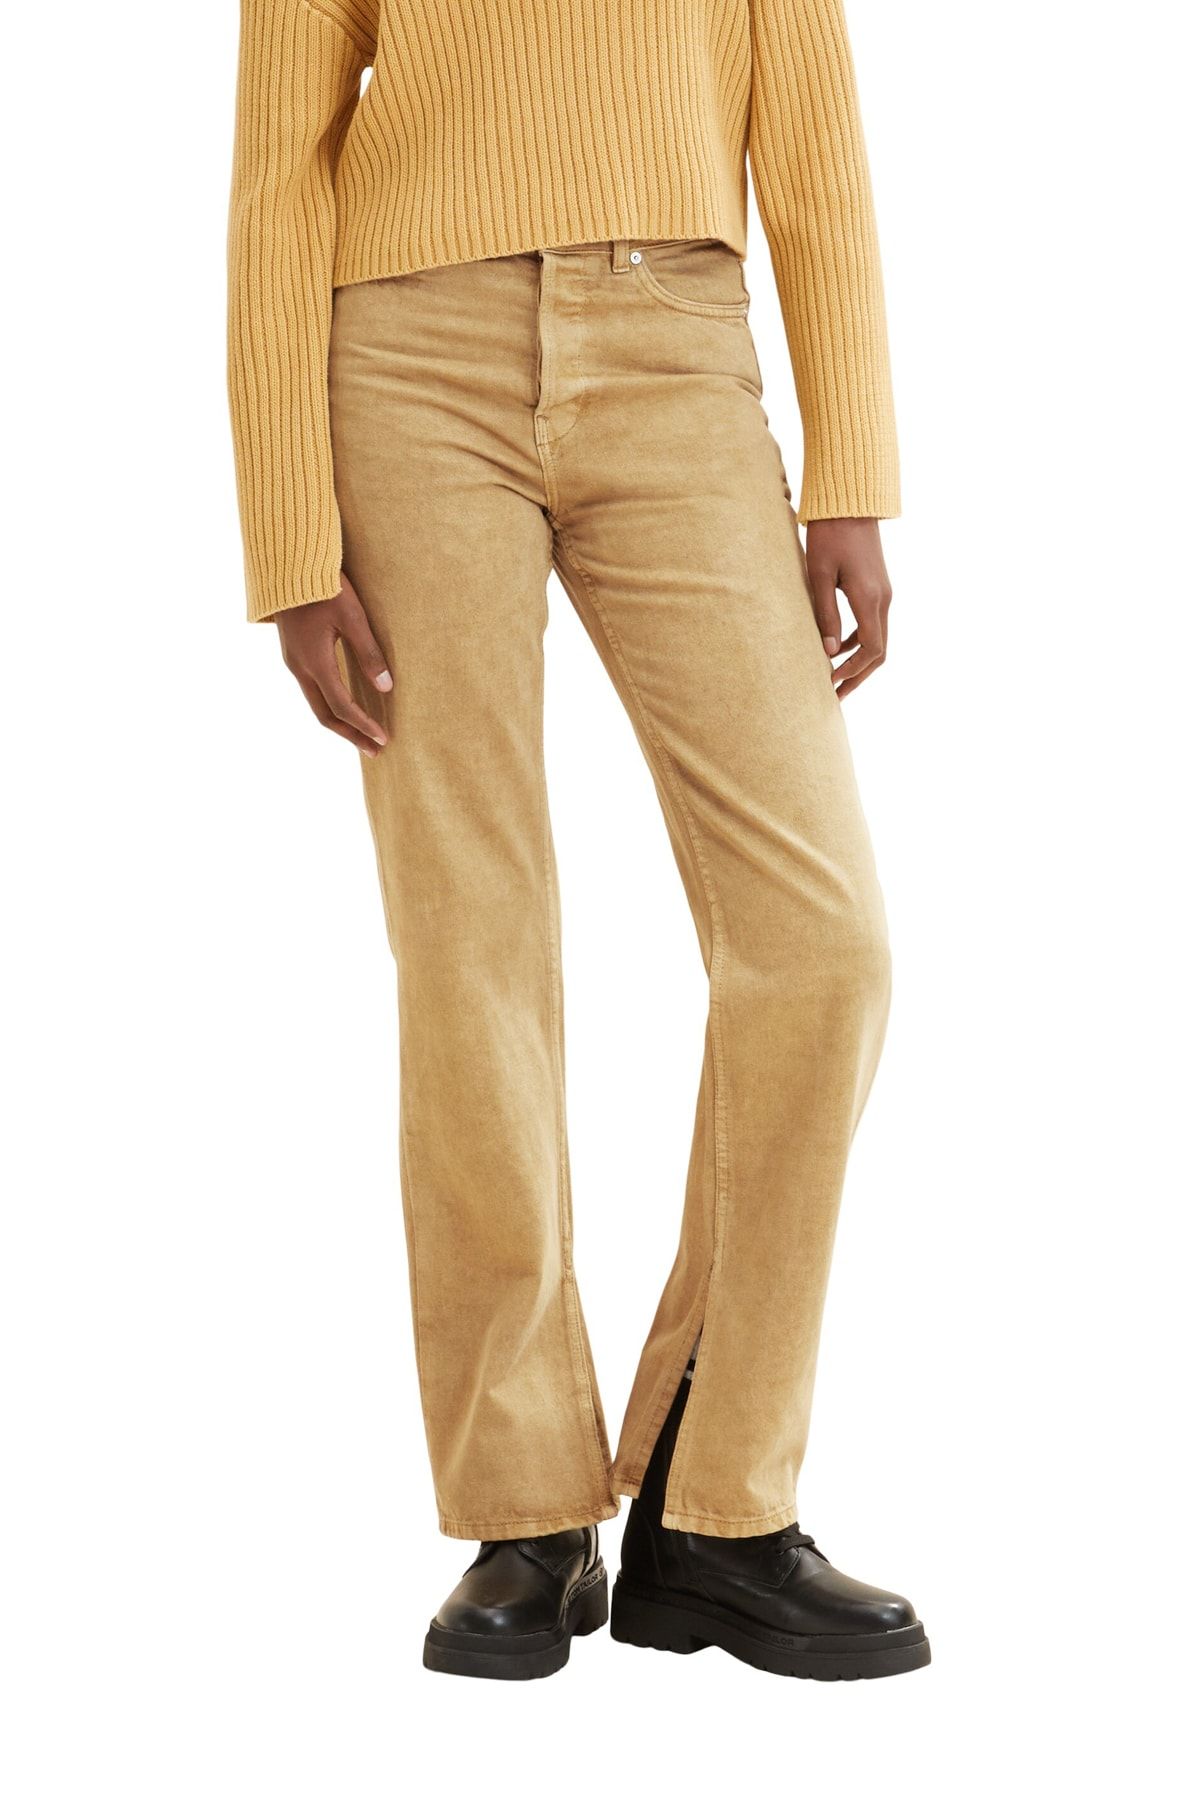 - - - Denim Brown Trendyol Tailor Straight Tom Jeans